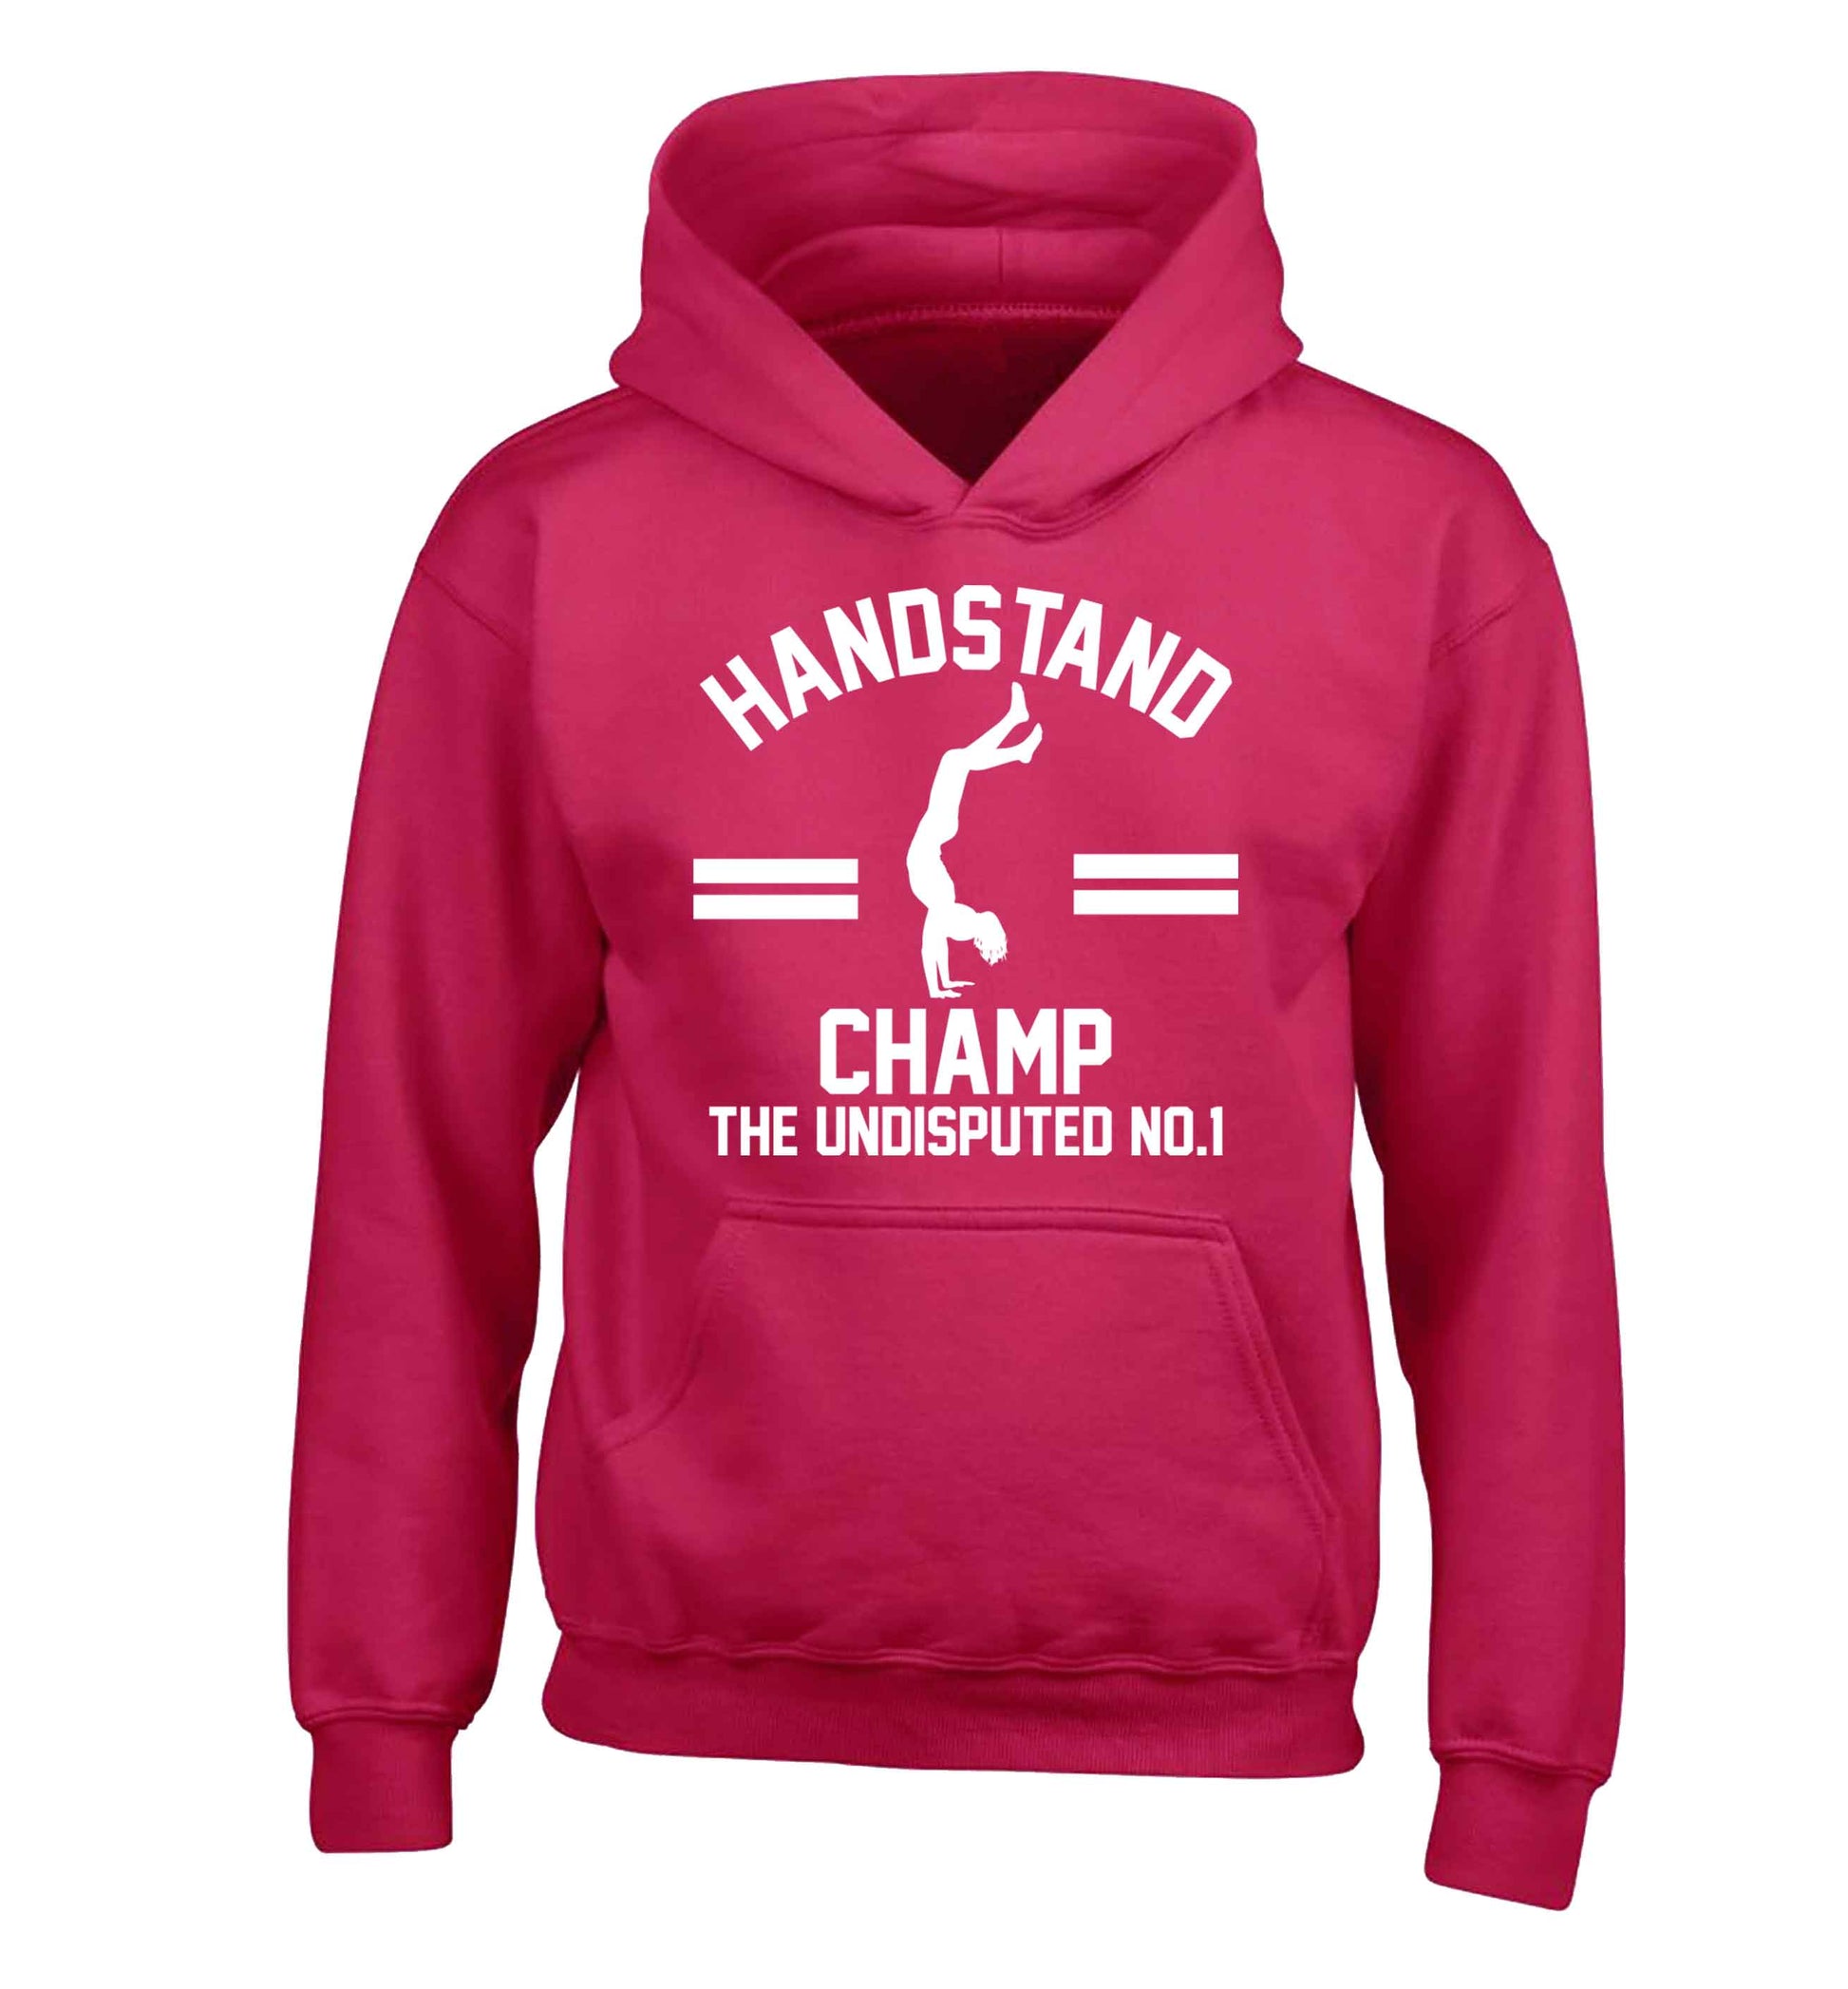 Undisputed handstand championship no.1  children's pink hoodie 12-13 Years